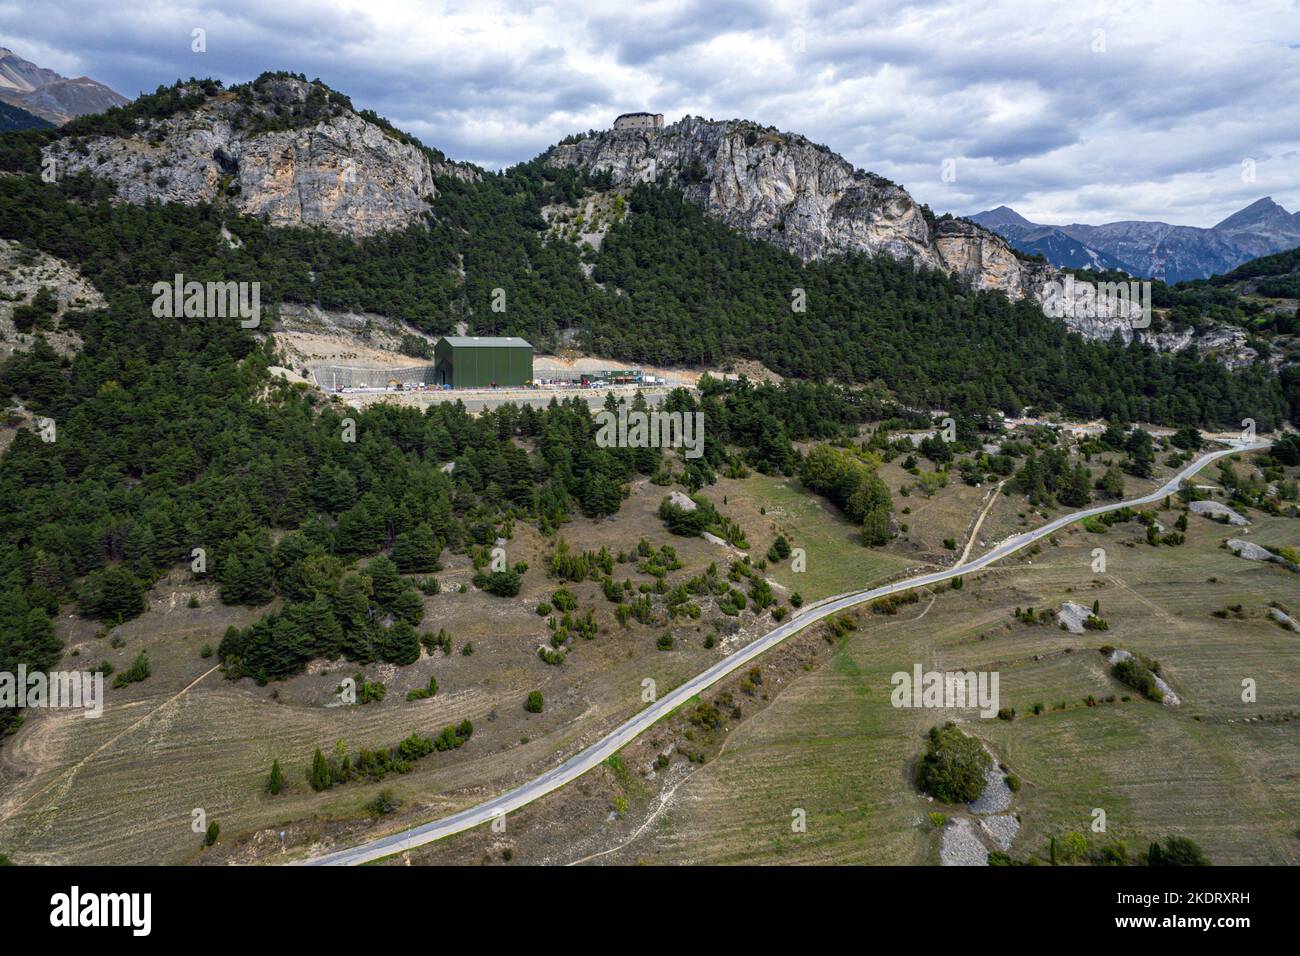 El valle de Maurienne, Vanoise, los Alpes franceses, Francia, Alpes, Alpino Foto de stock